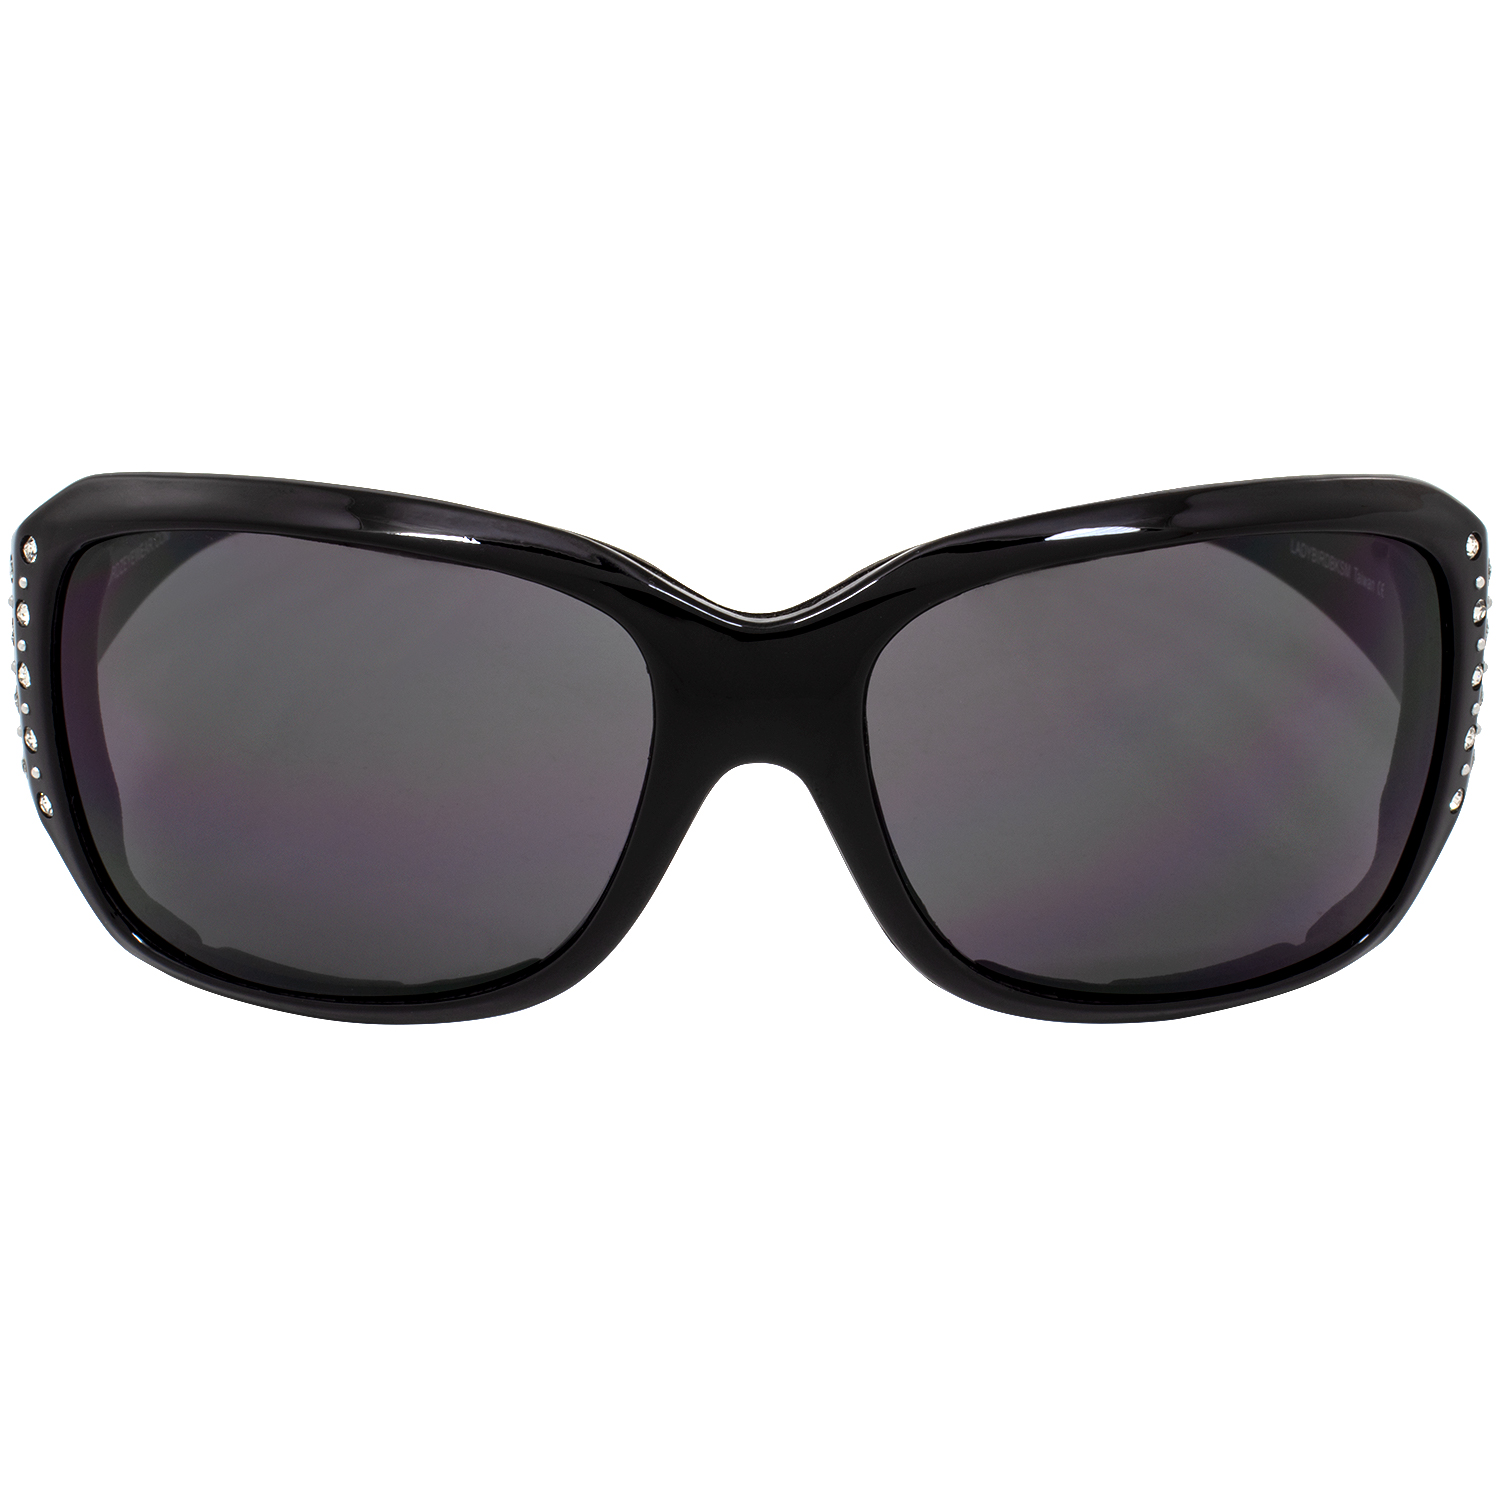 Birdz Eyewear LadyBird Padded Motorcycle Sunglasses Glasses for Women Bling Rhinestone Accents 3 Pairs Black Frame w/Clear Smoke & Driving Mirror Lenses - image 5 of 9